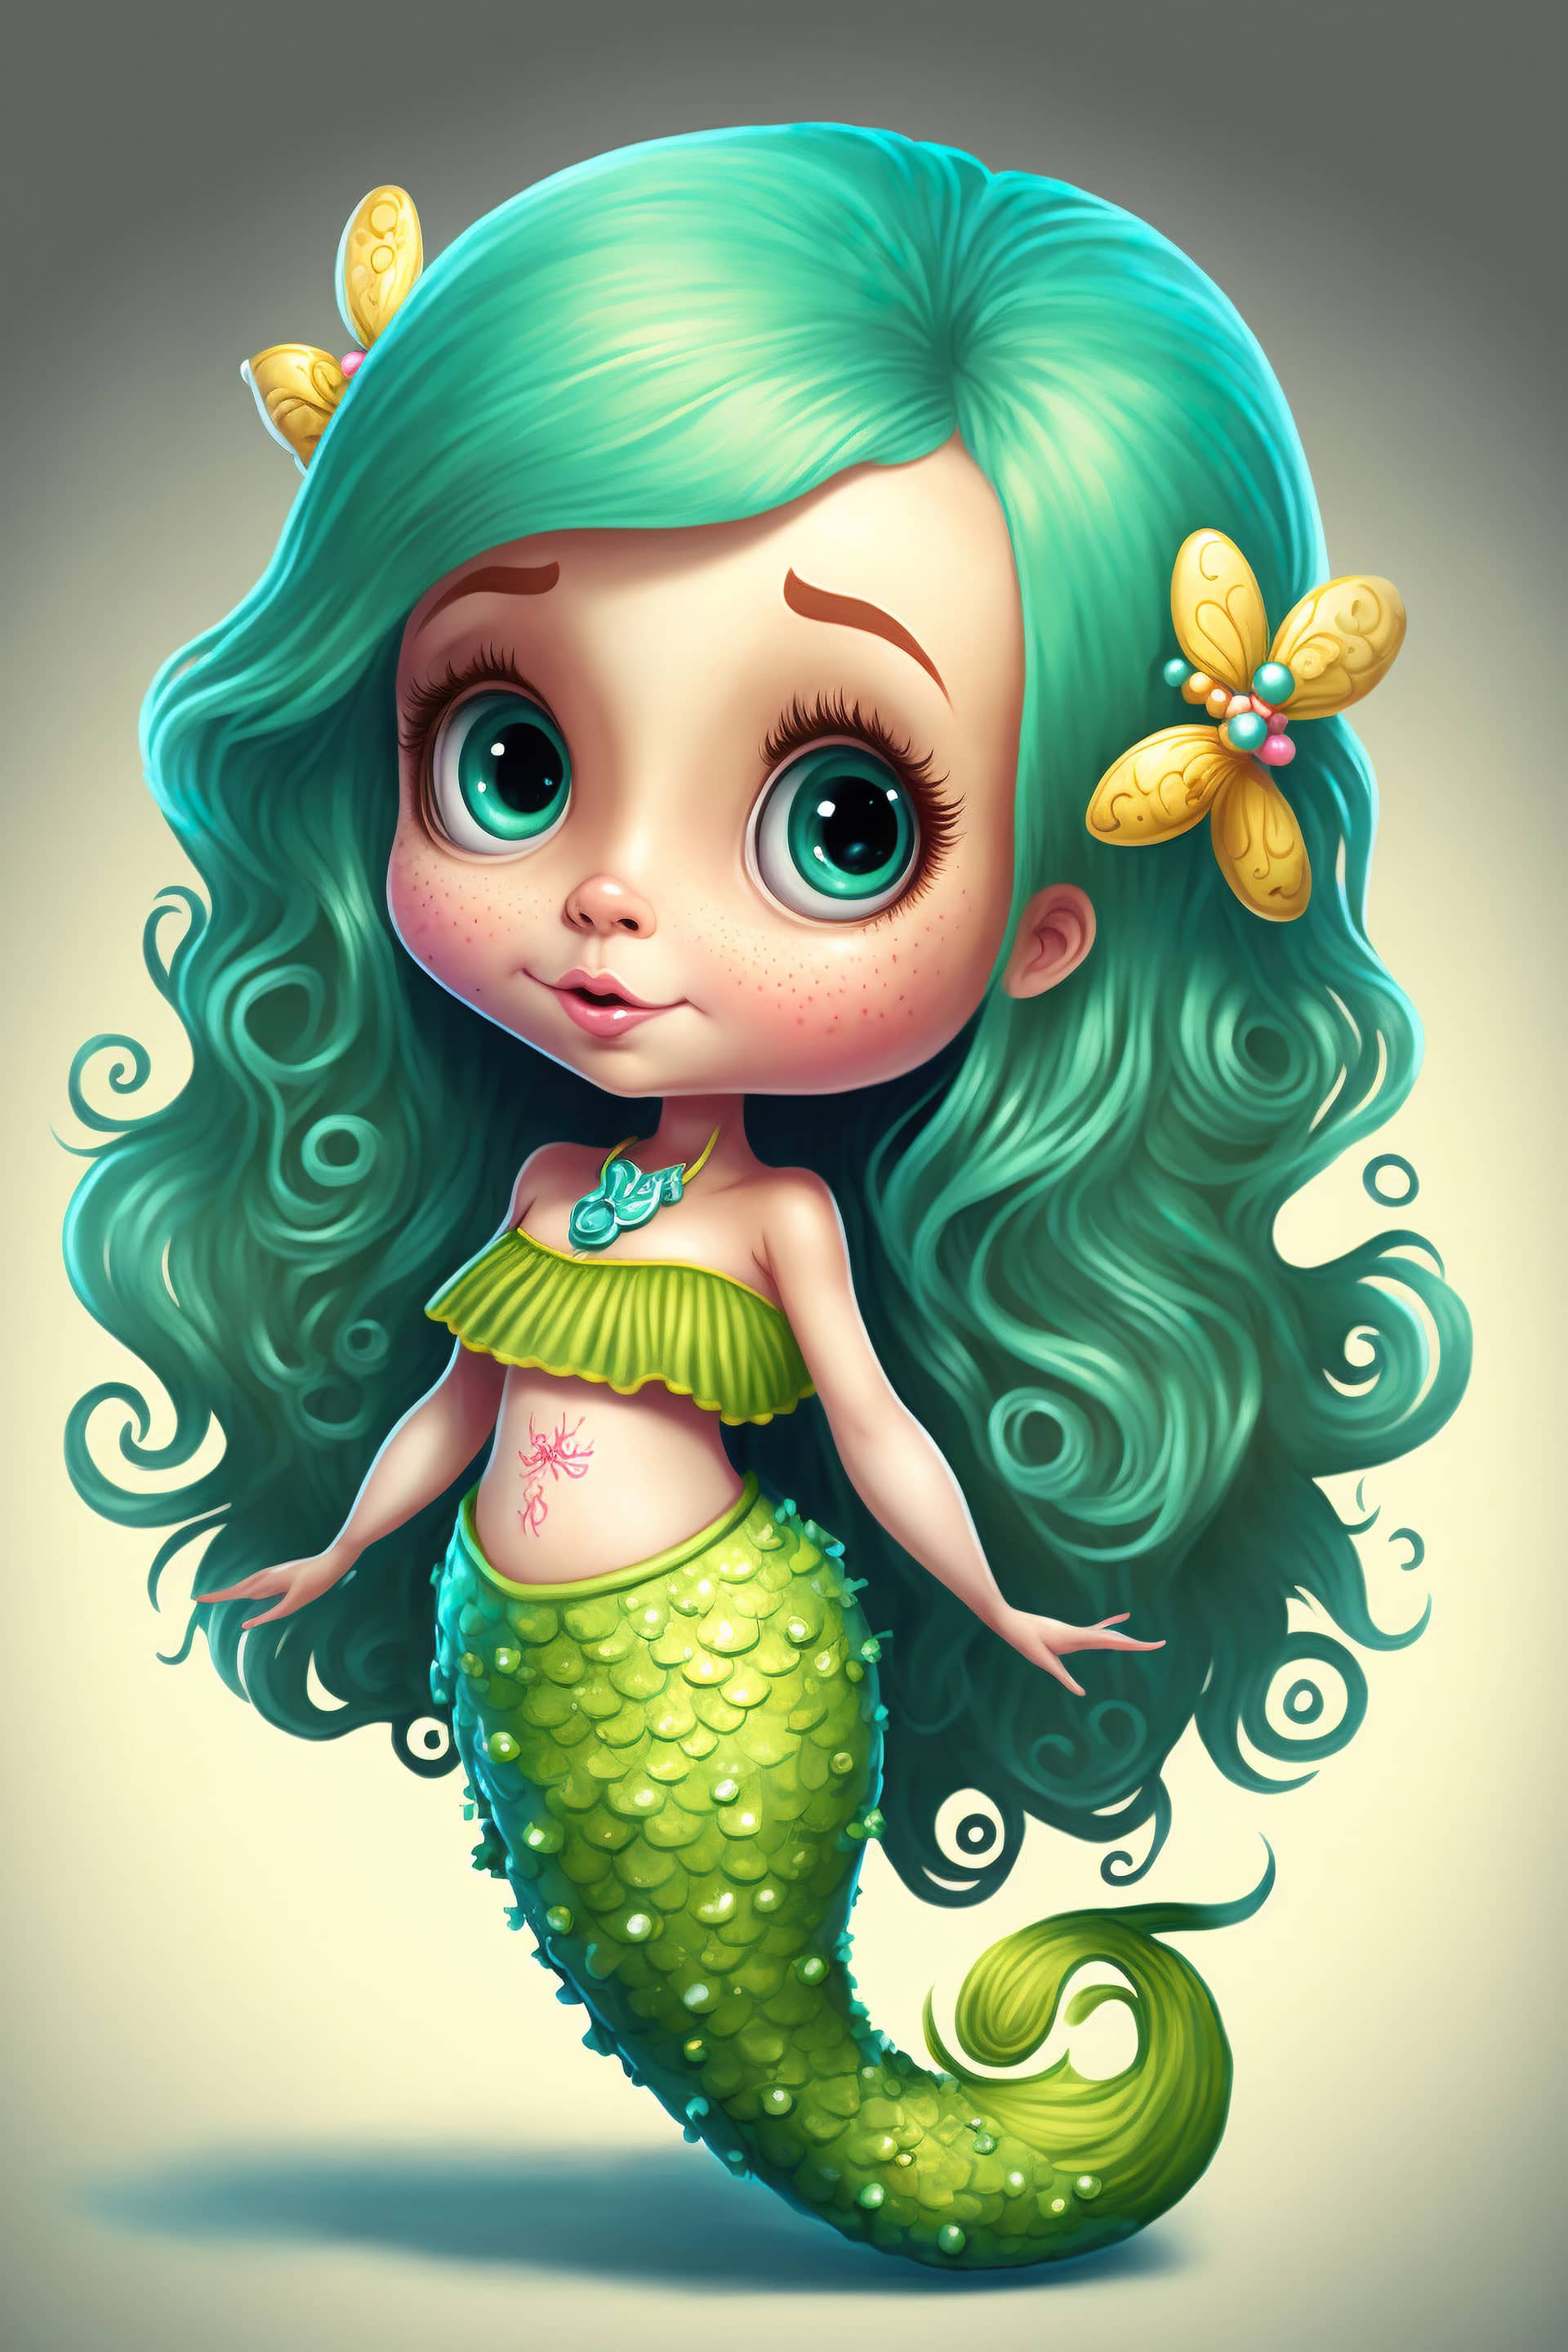 Beautiful cartoon cute mermaid poster kids illustration